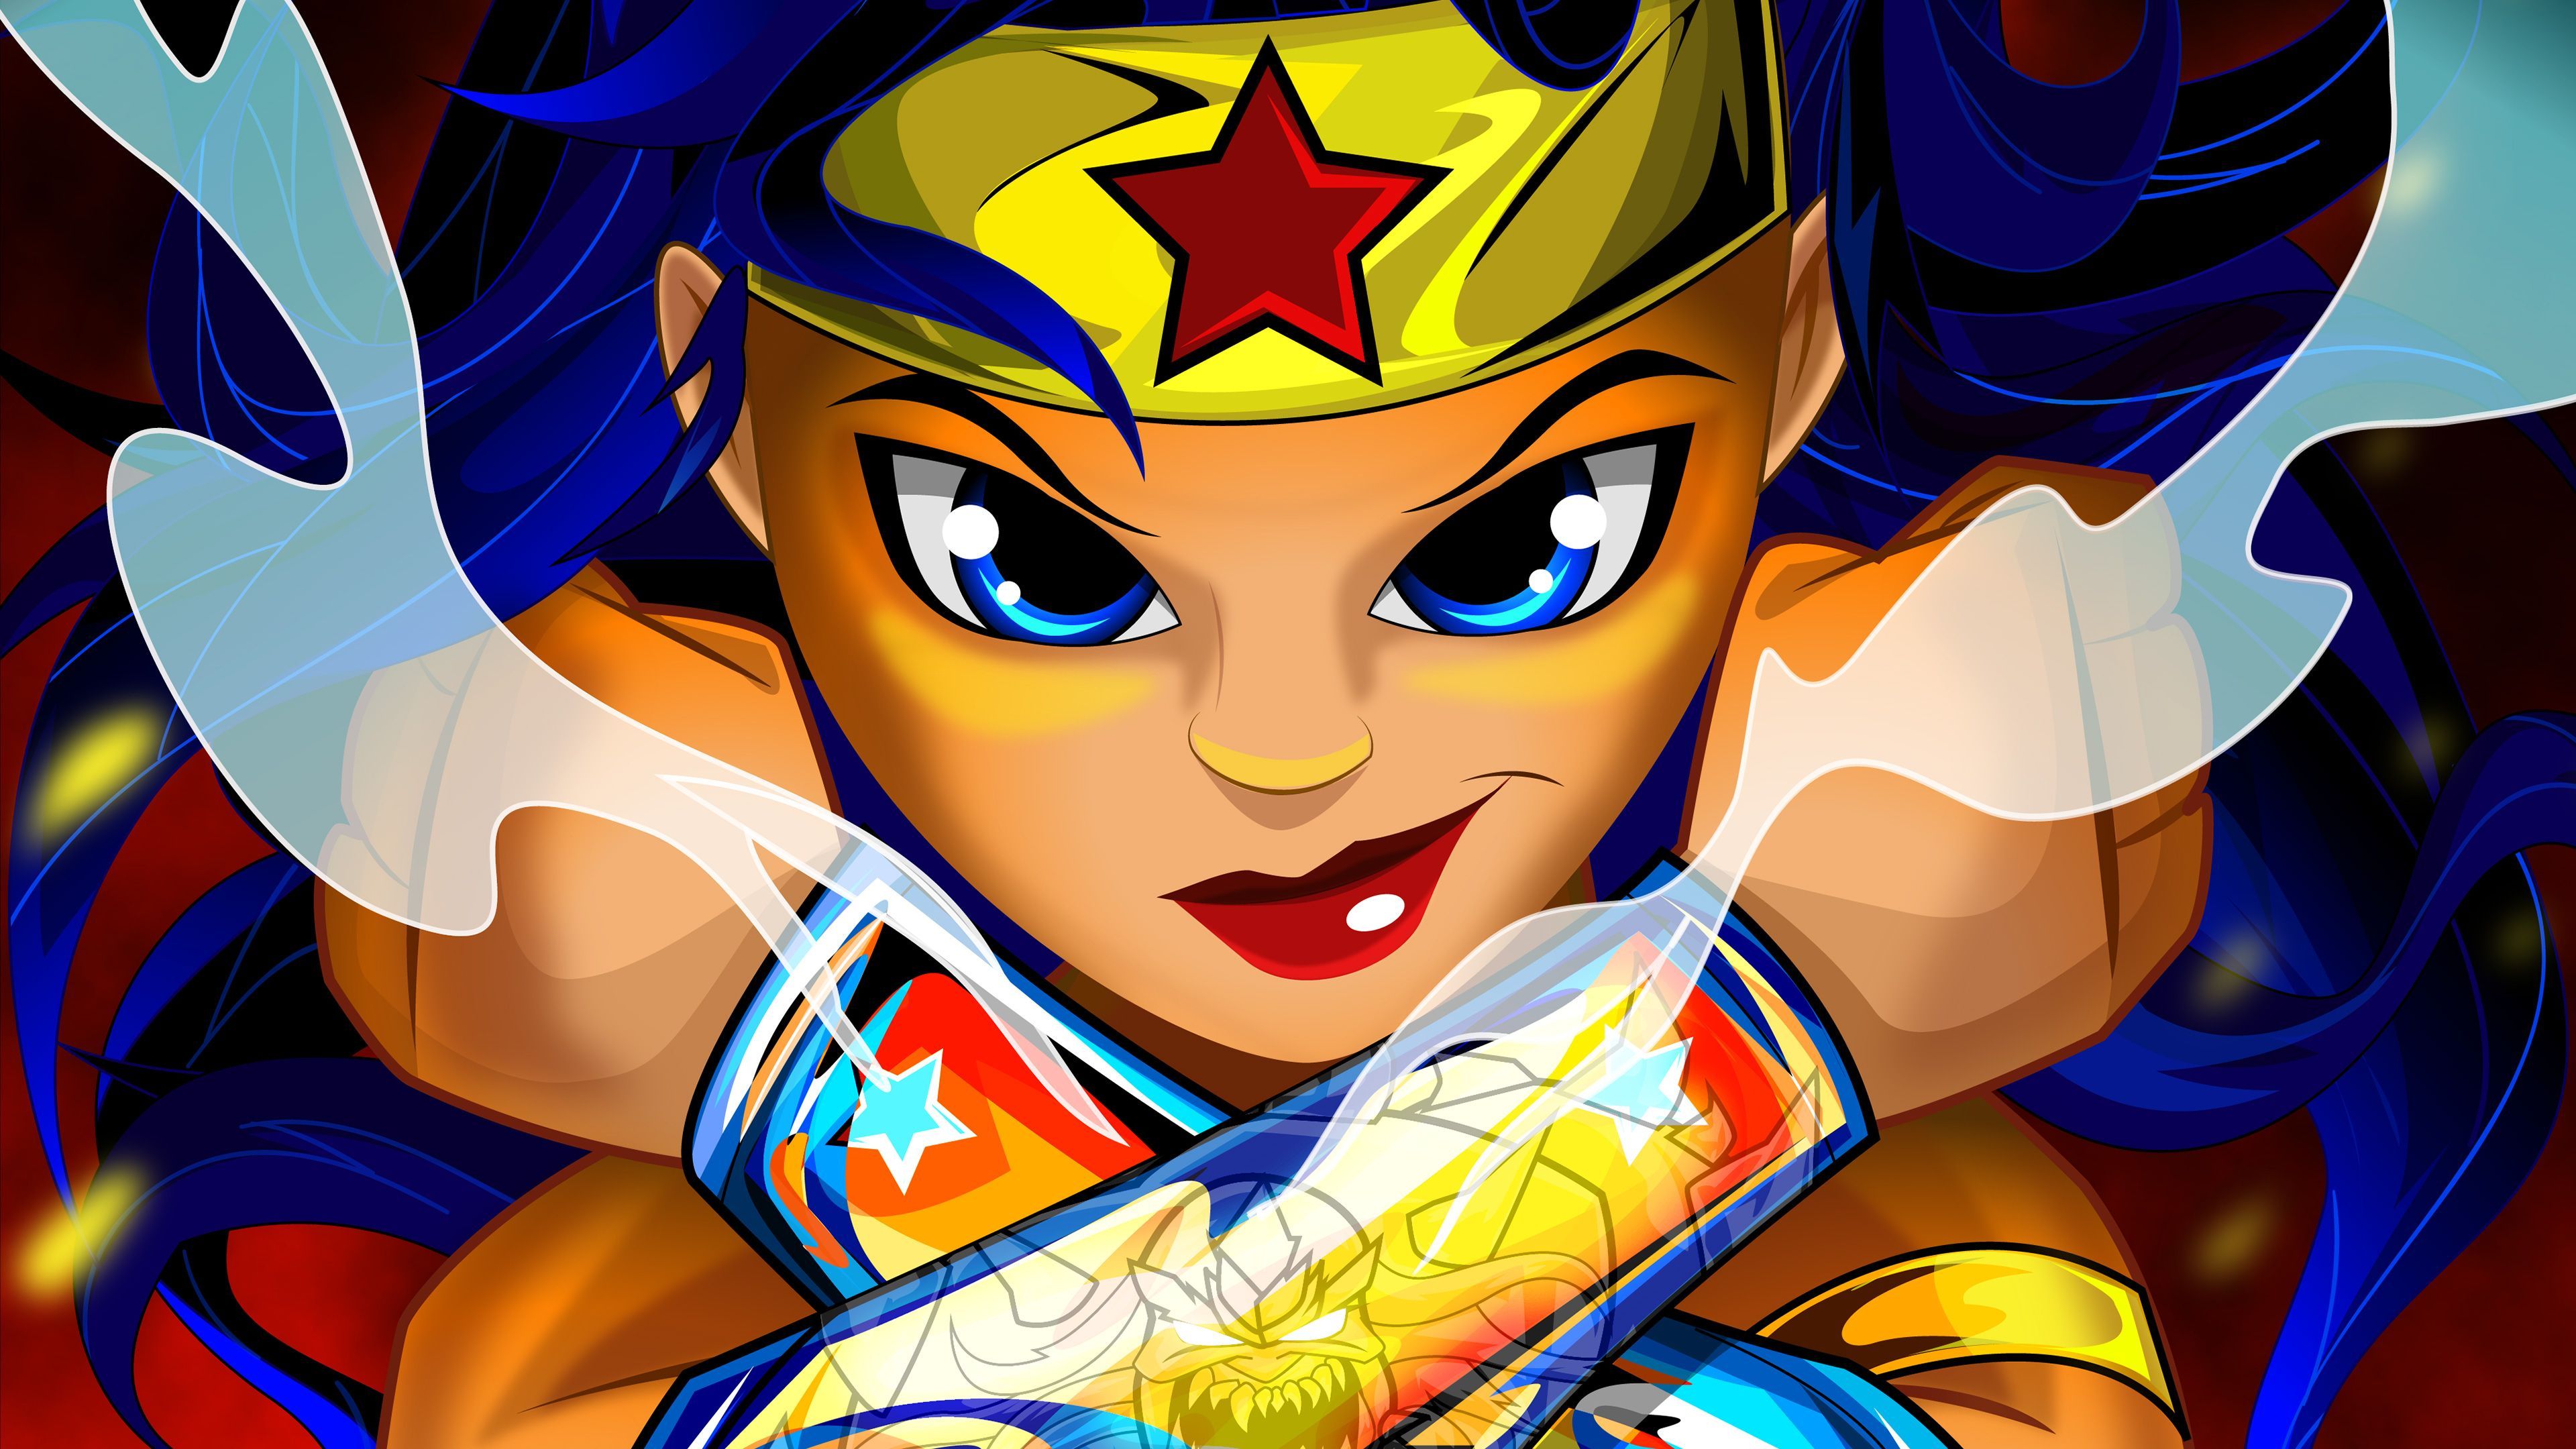 Wonder Woman Digital Art 4k. Art, Art wallpaper, Digital art